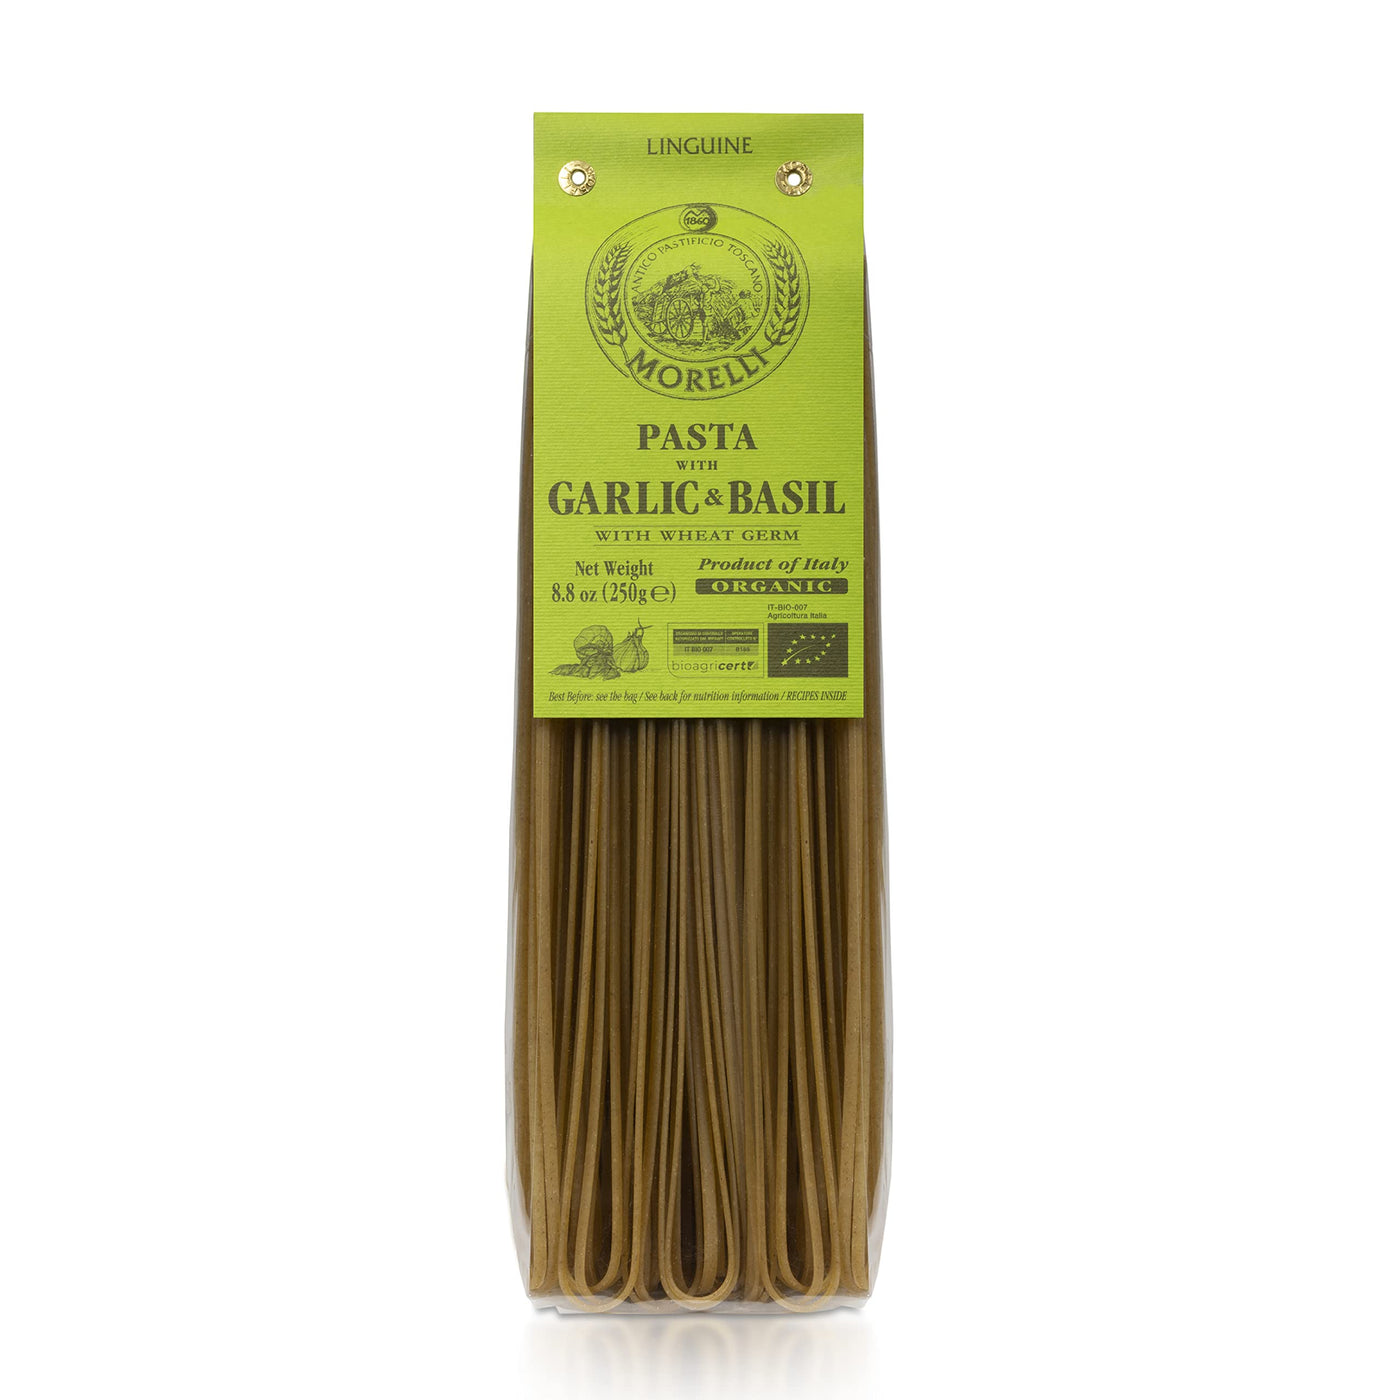 Basil and Garlic Linguine, Organic, Morelli, 8.8 oz